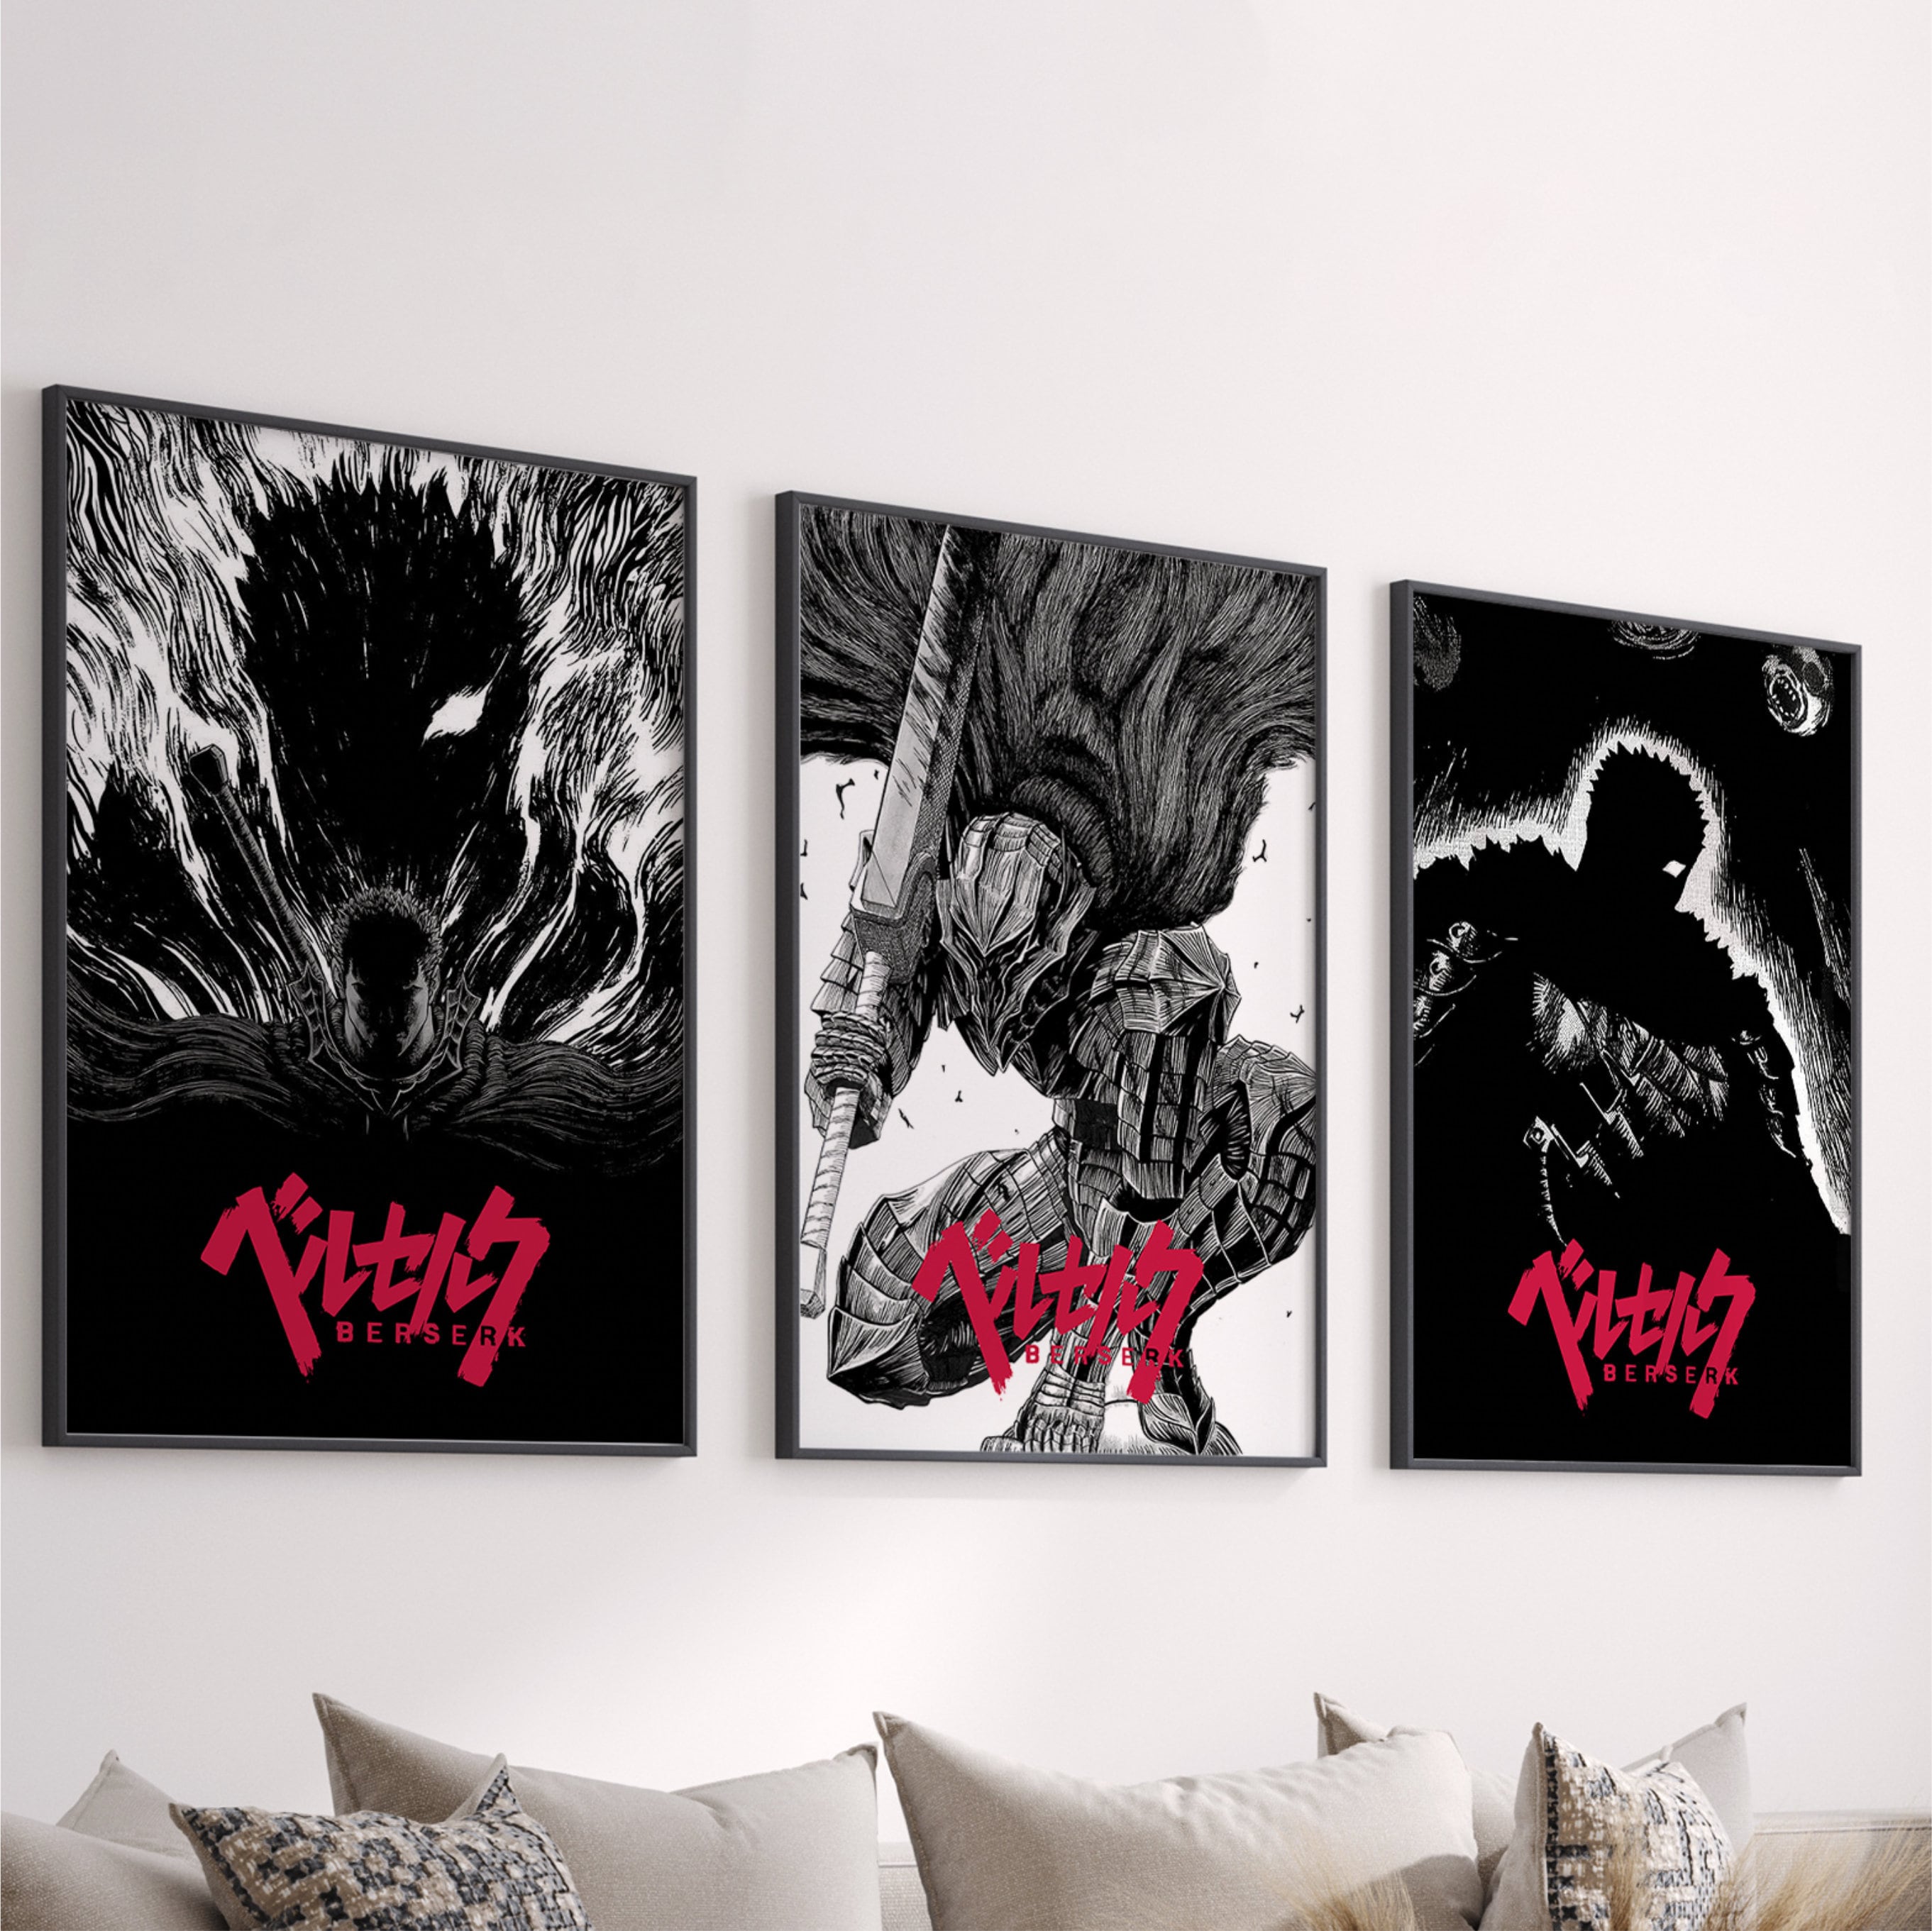 5 Berserk Original Official Poster B2 Anime Promotional Poster